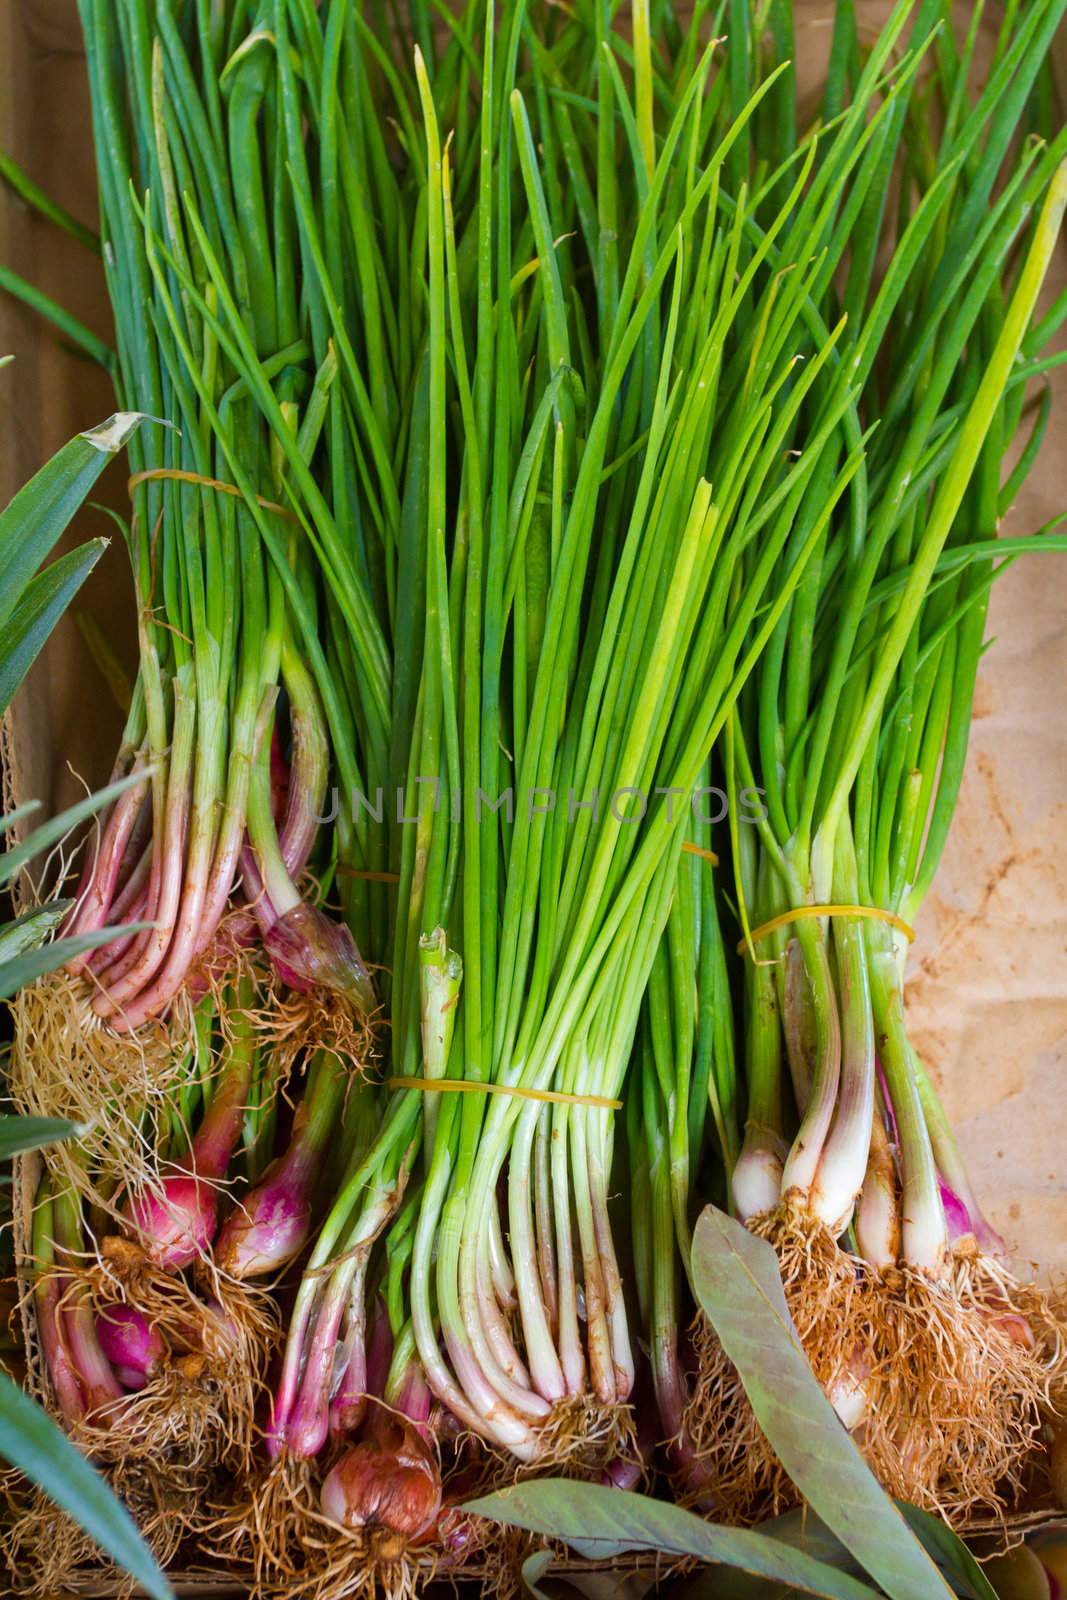 Hawaiian Green Onions or Chives by joshuaraineyphotography